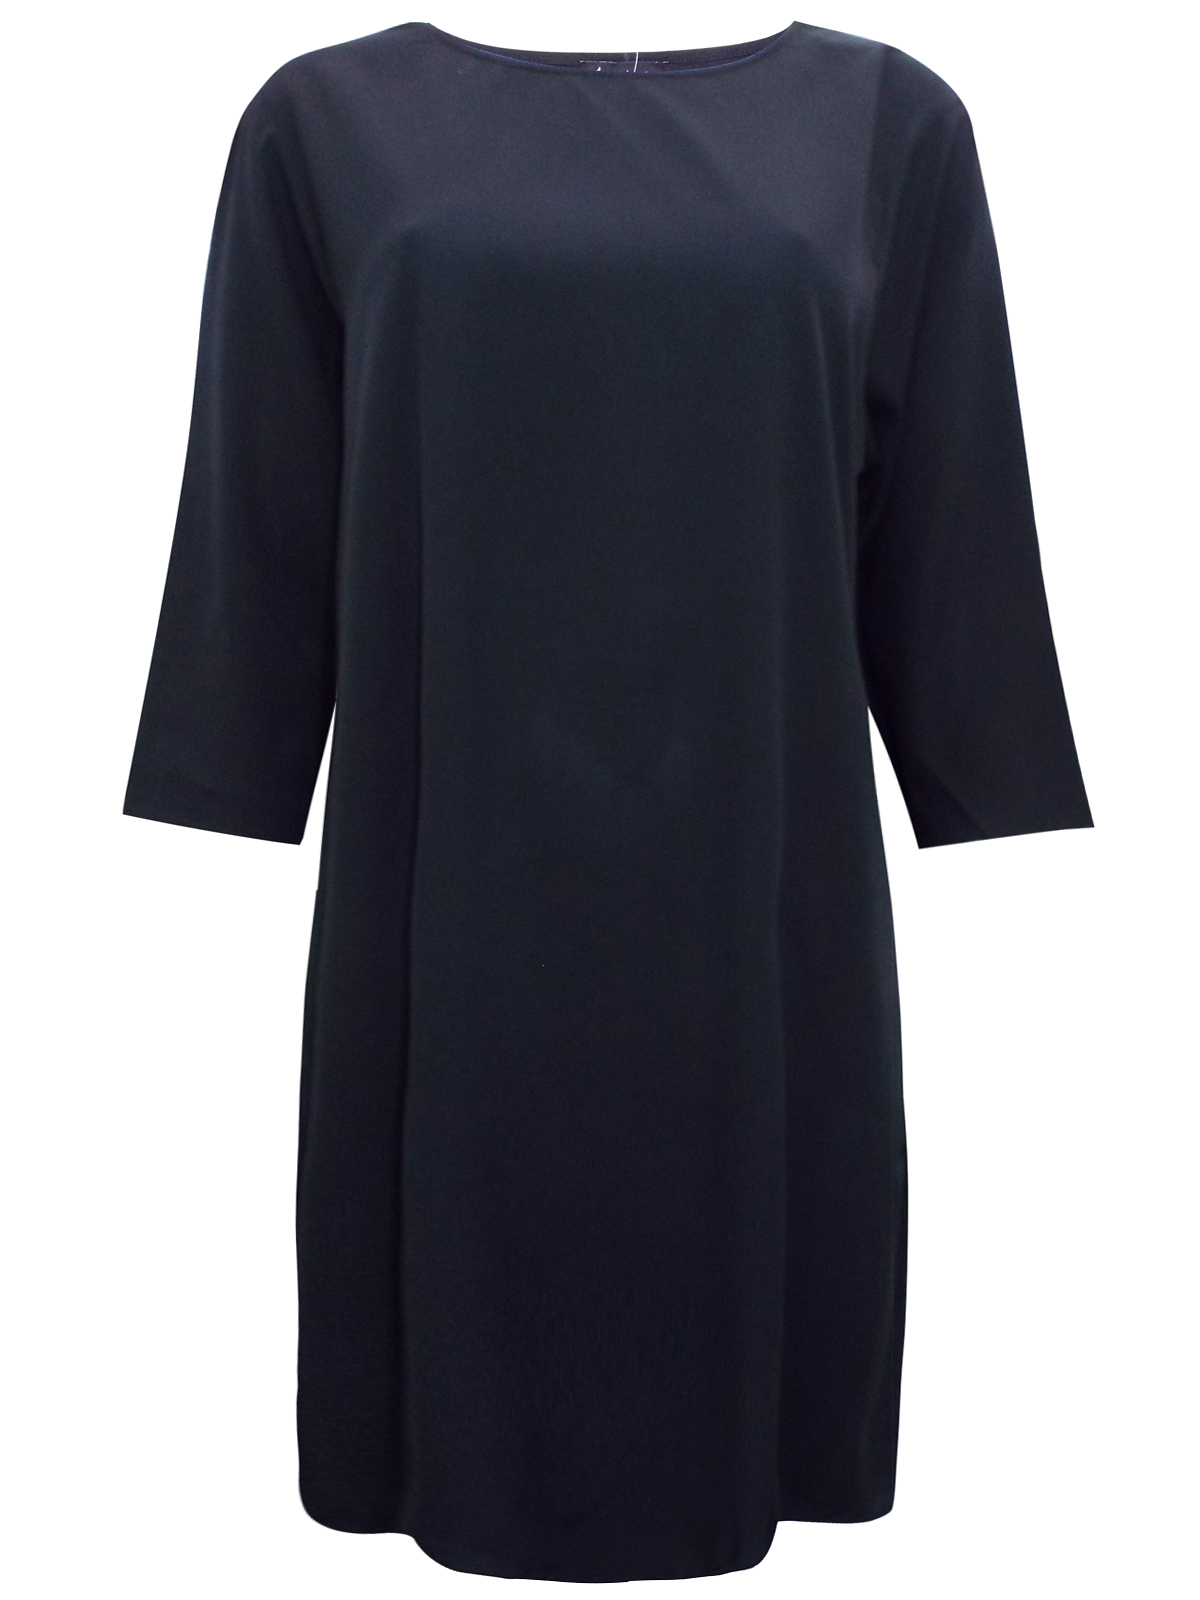 Ayarisa - - Ayarisa BLACK Scoop Neck 3/4 Sleeve Shift Dress - Size 14 to 16